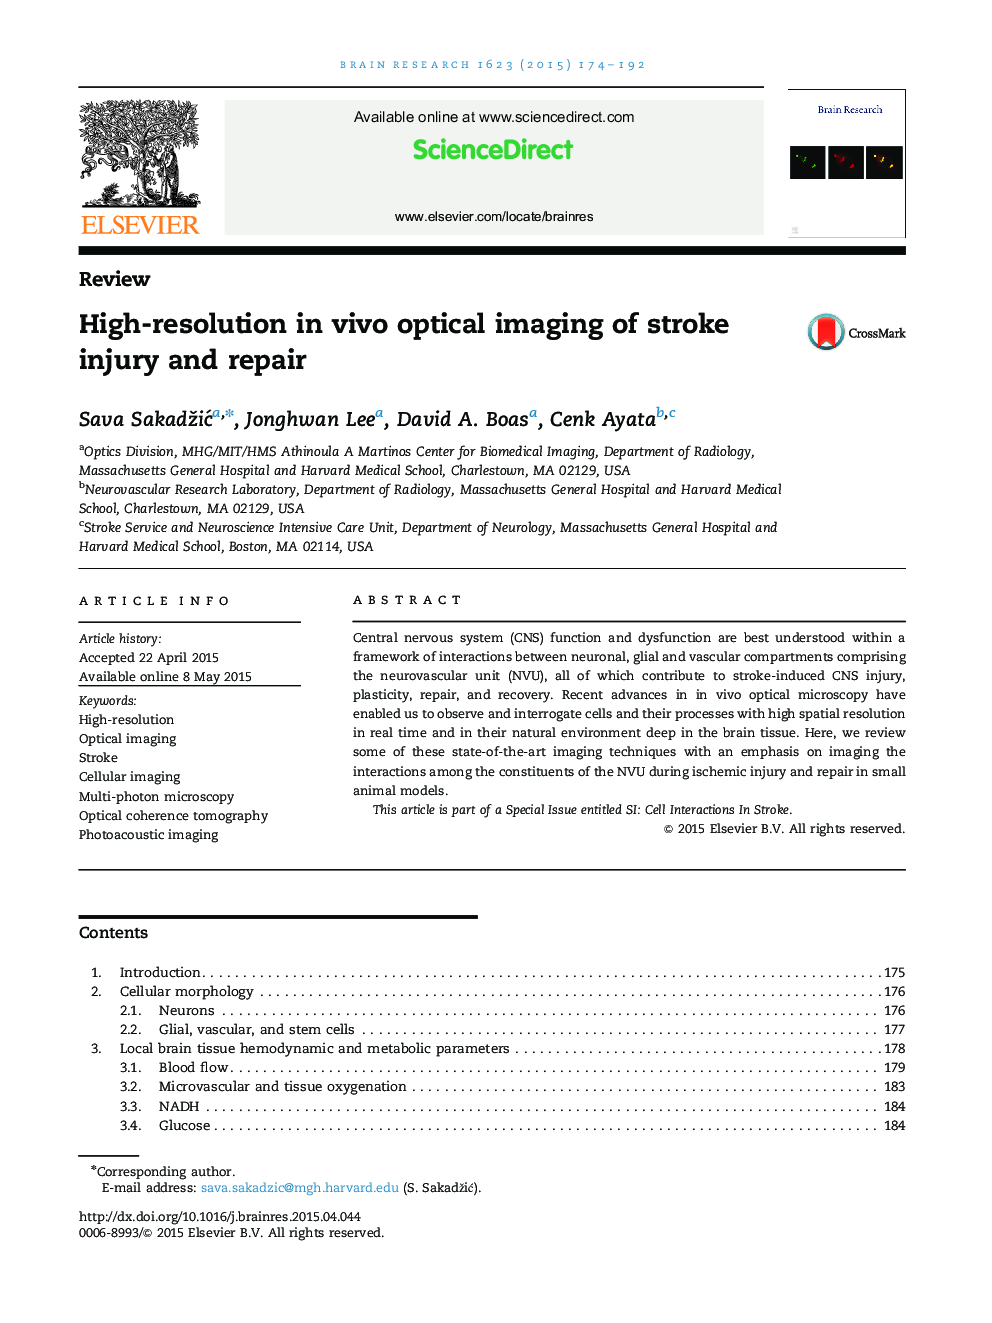 High-resolution in vivo optical imaging of stroke injury and repair